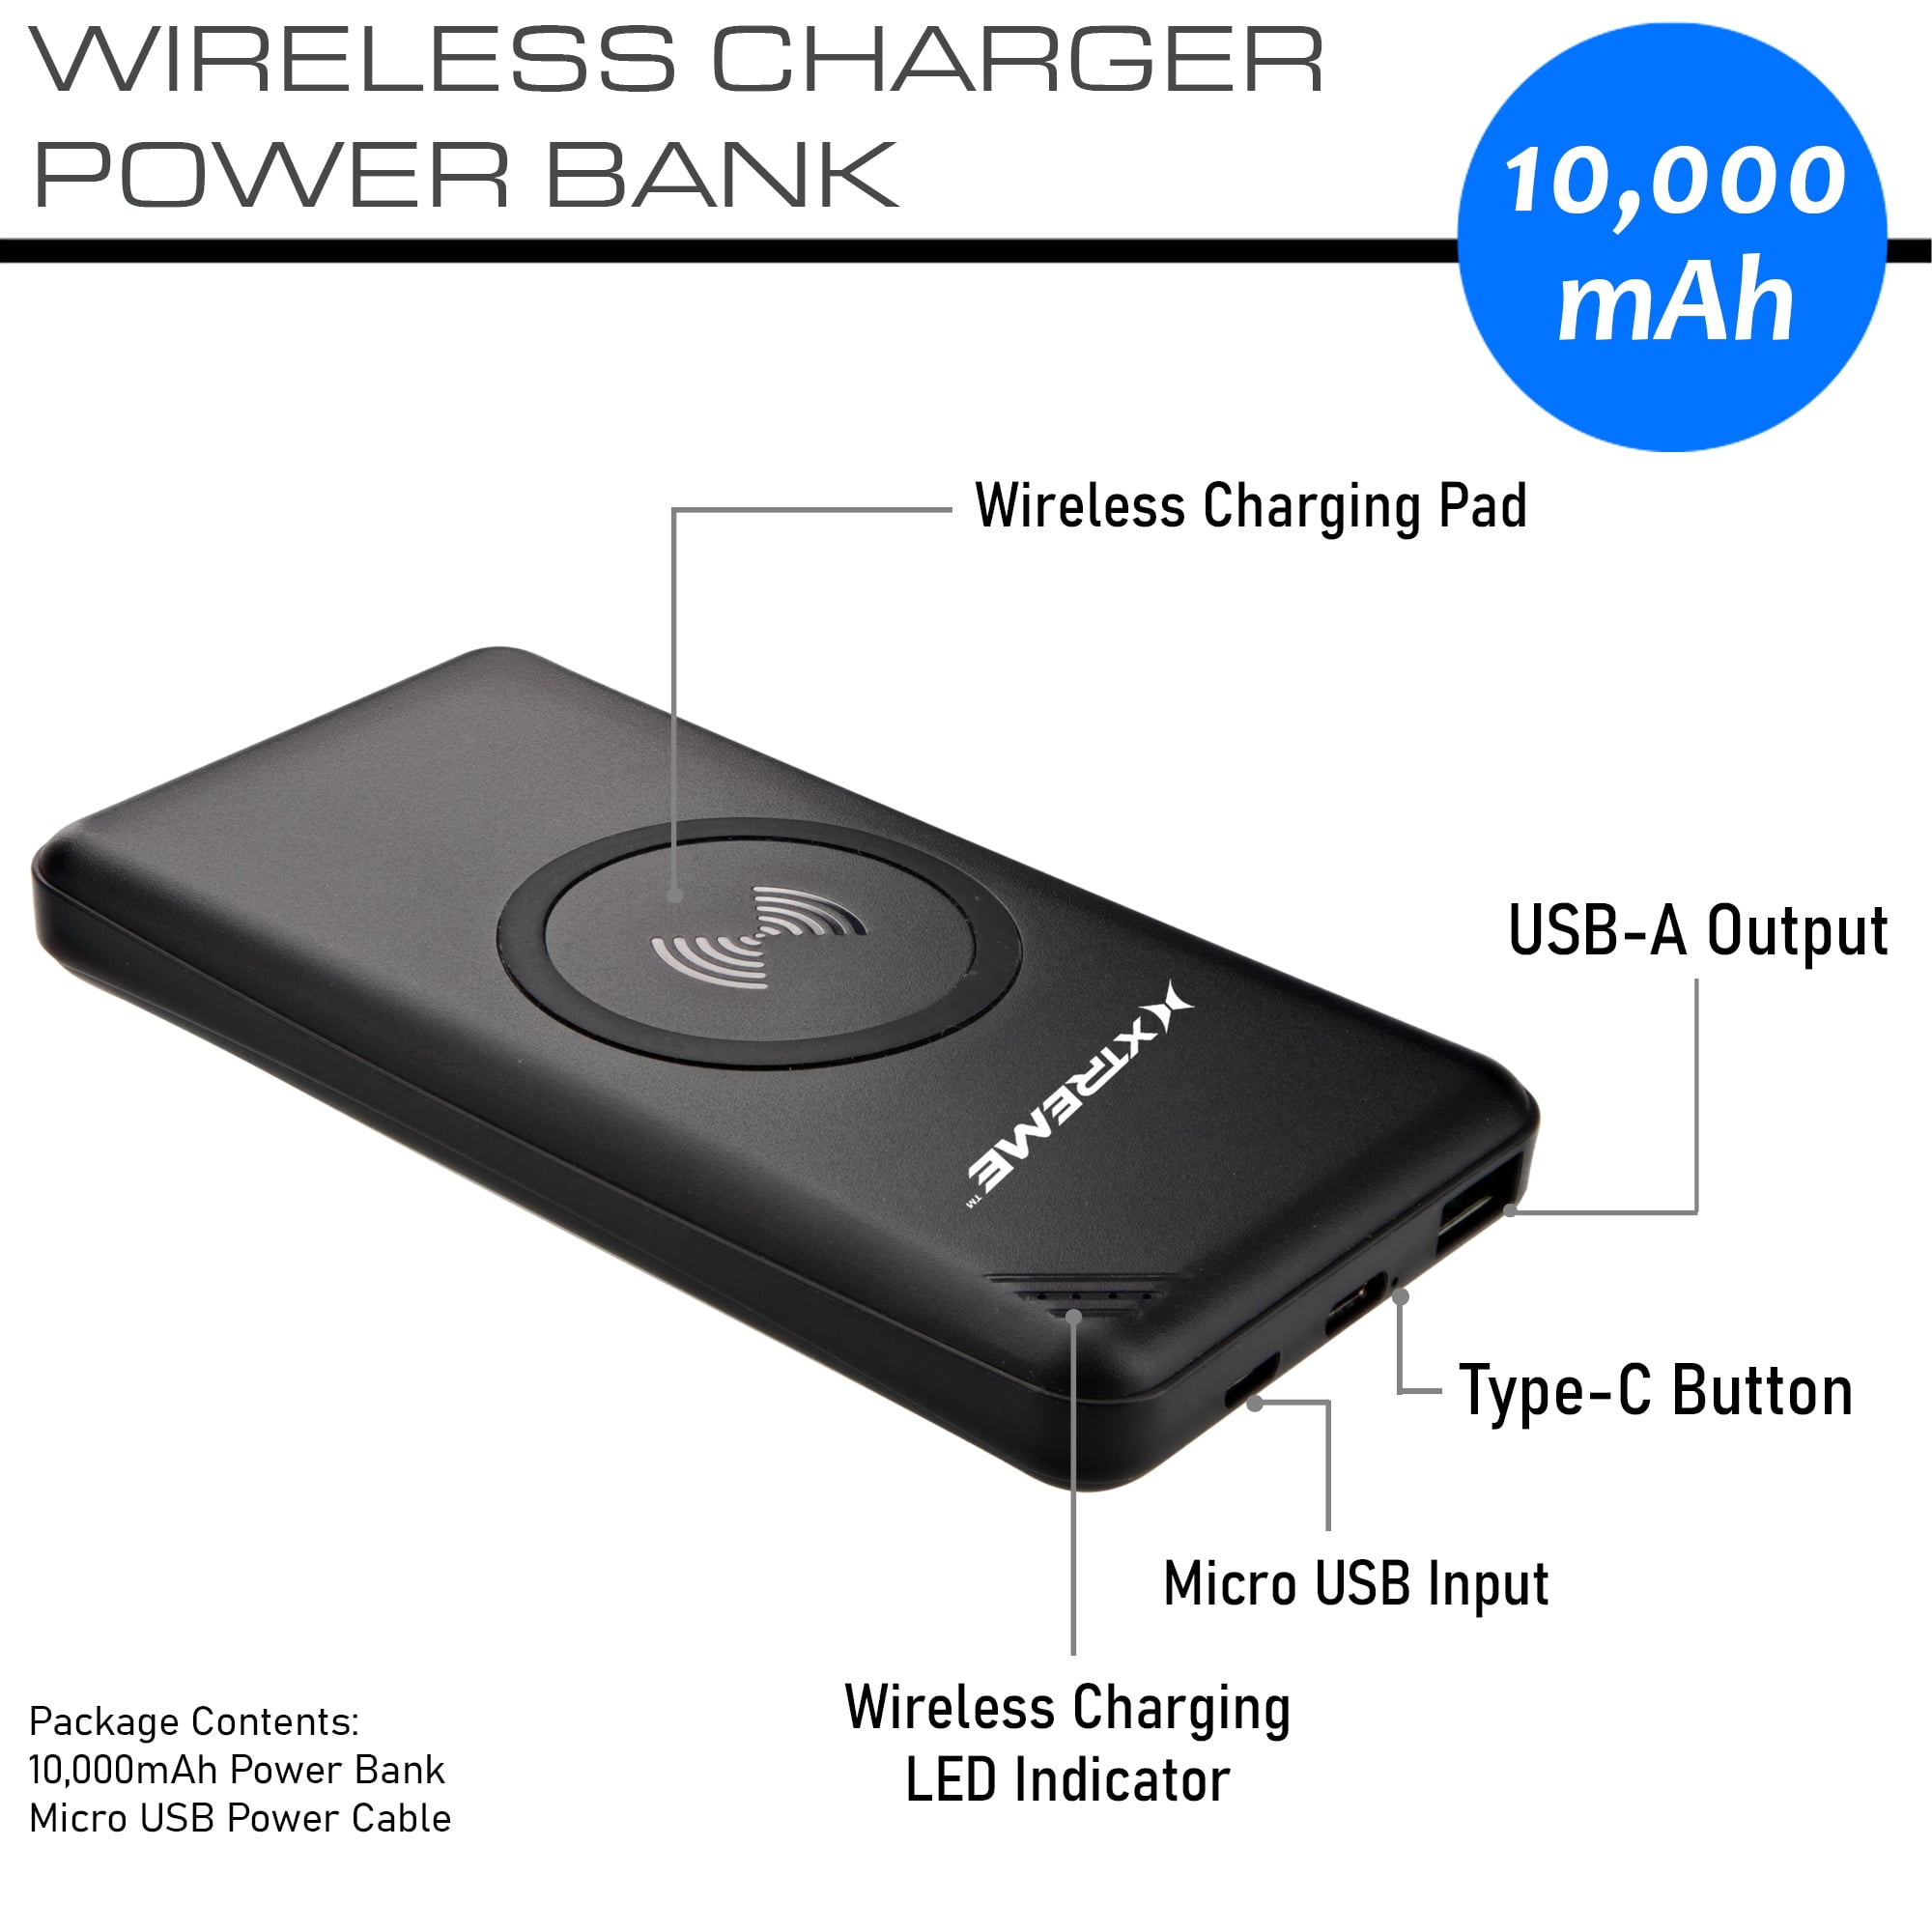 Indiener Vertrek Punt Xtreme XBB80147BLK 1000 mAh Wireless Charger Power Bank - Black -  Walmart.com